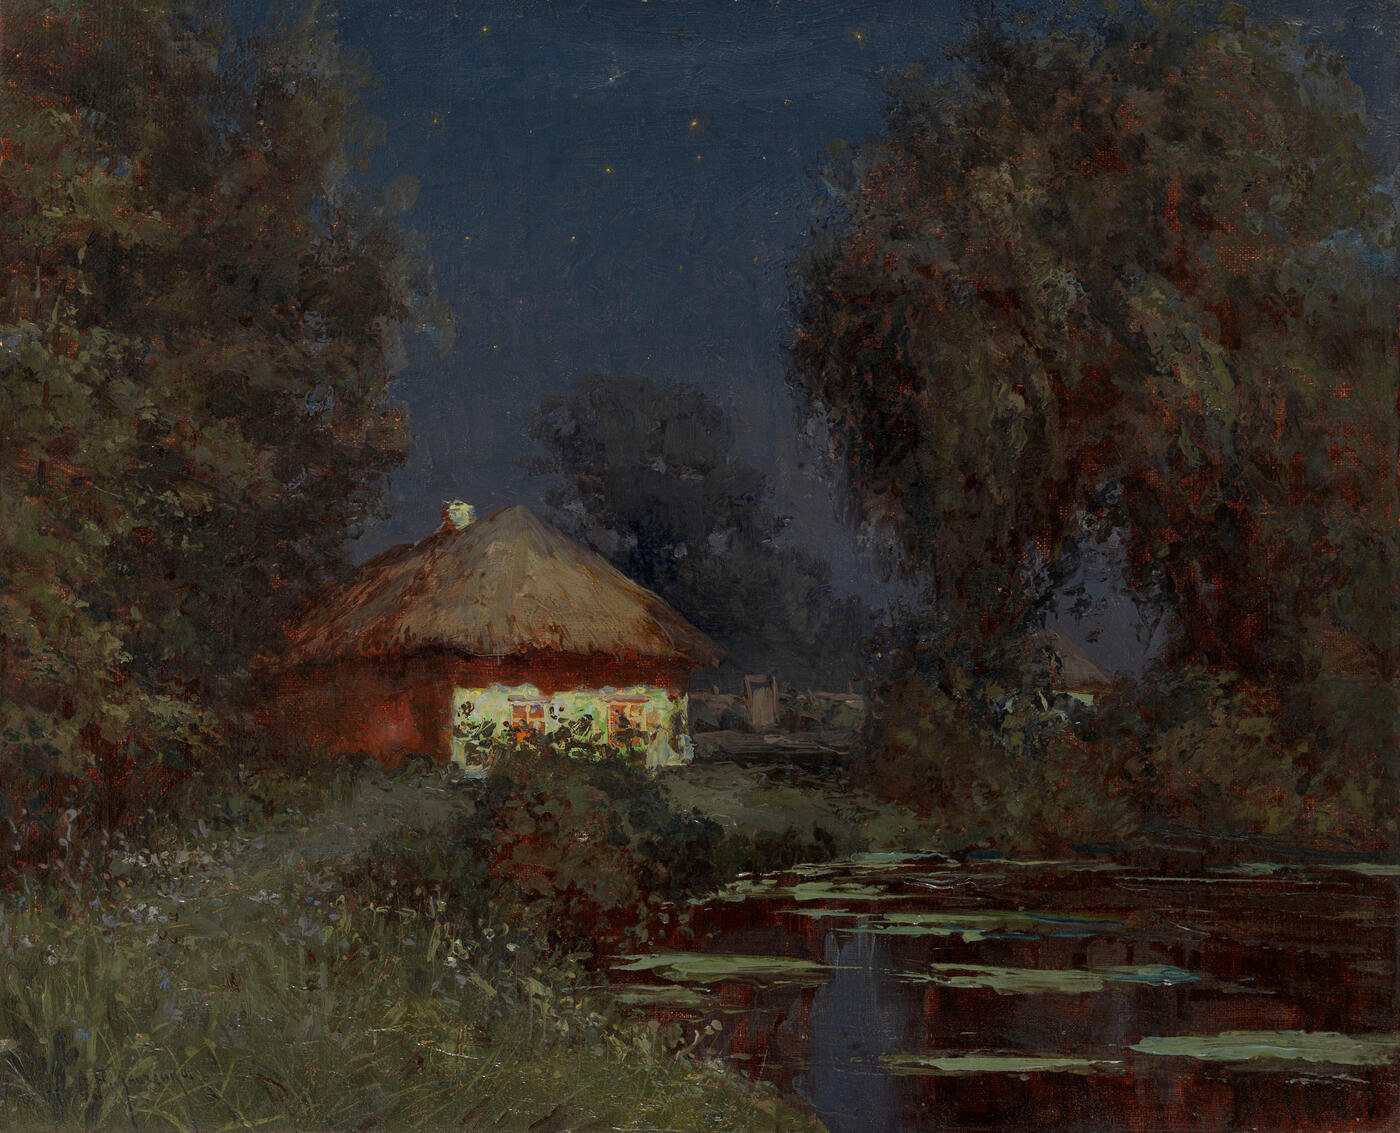 Ukrainian Hut near a Pond at Night